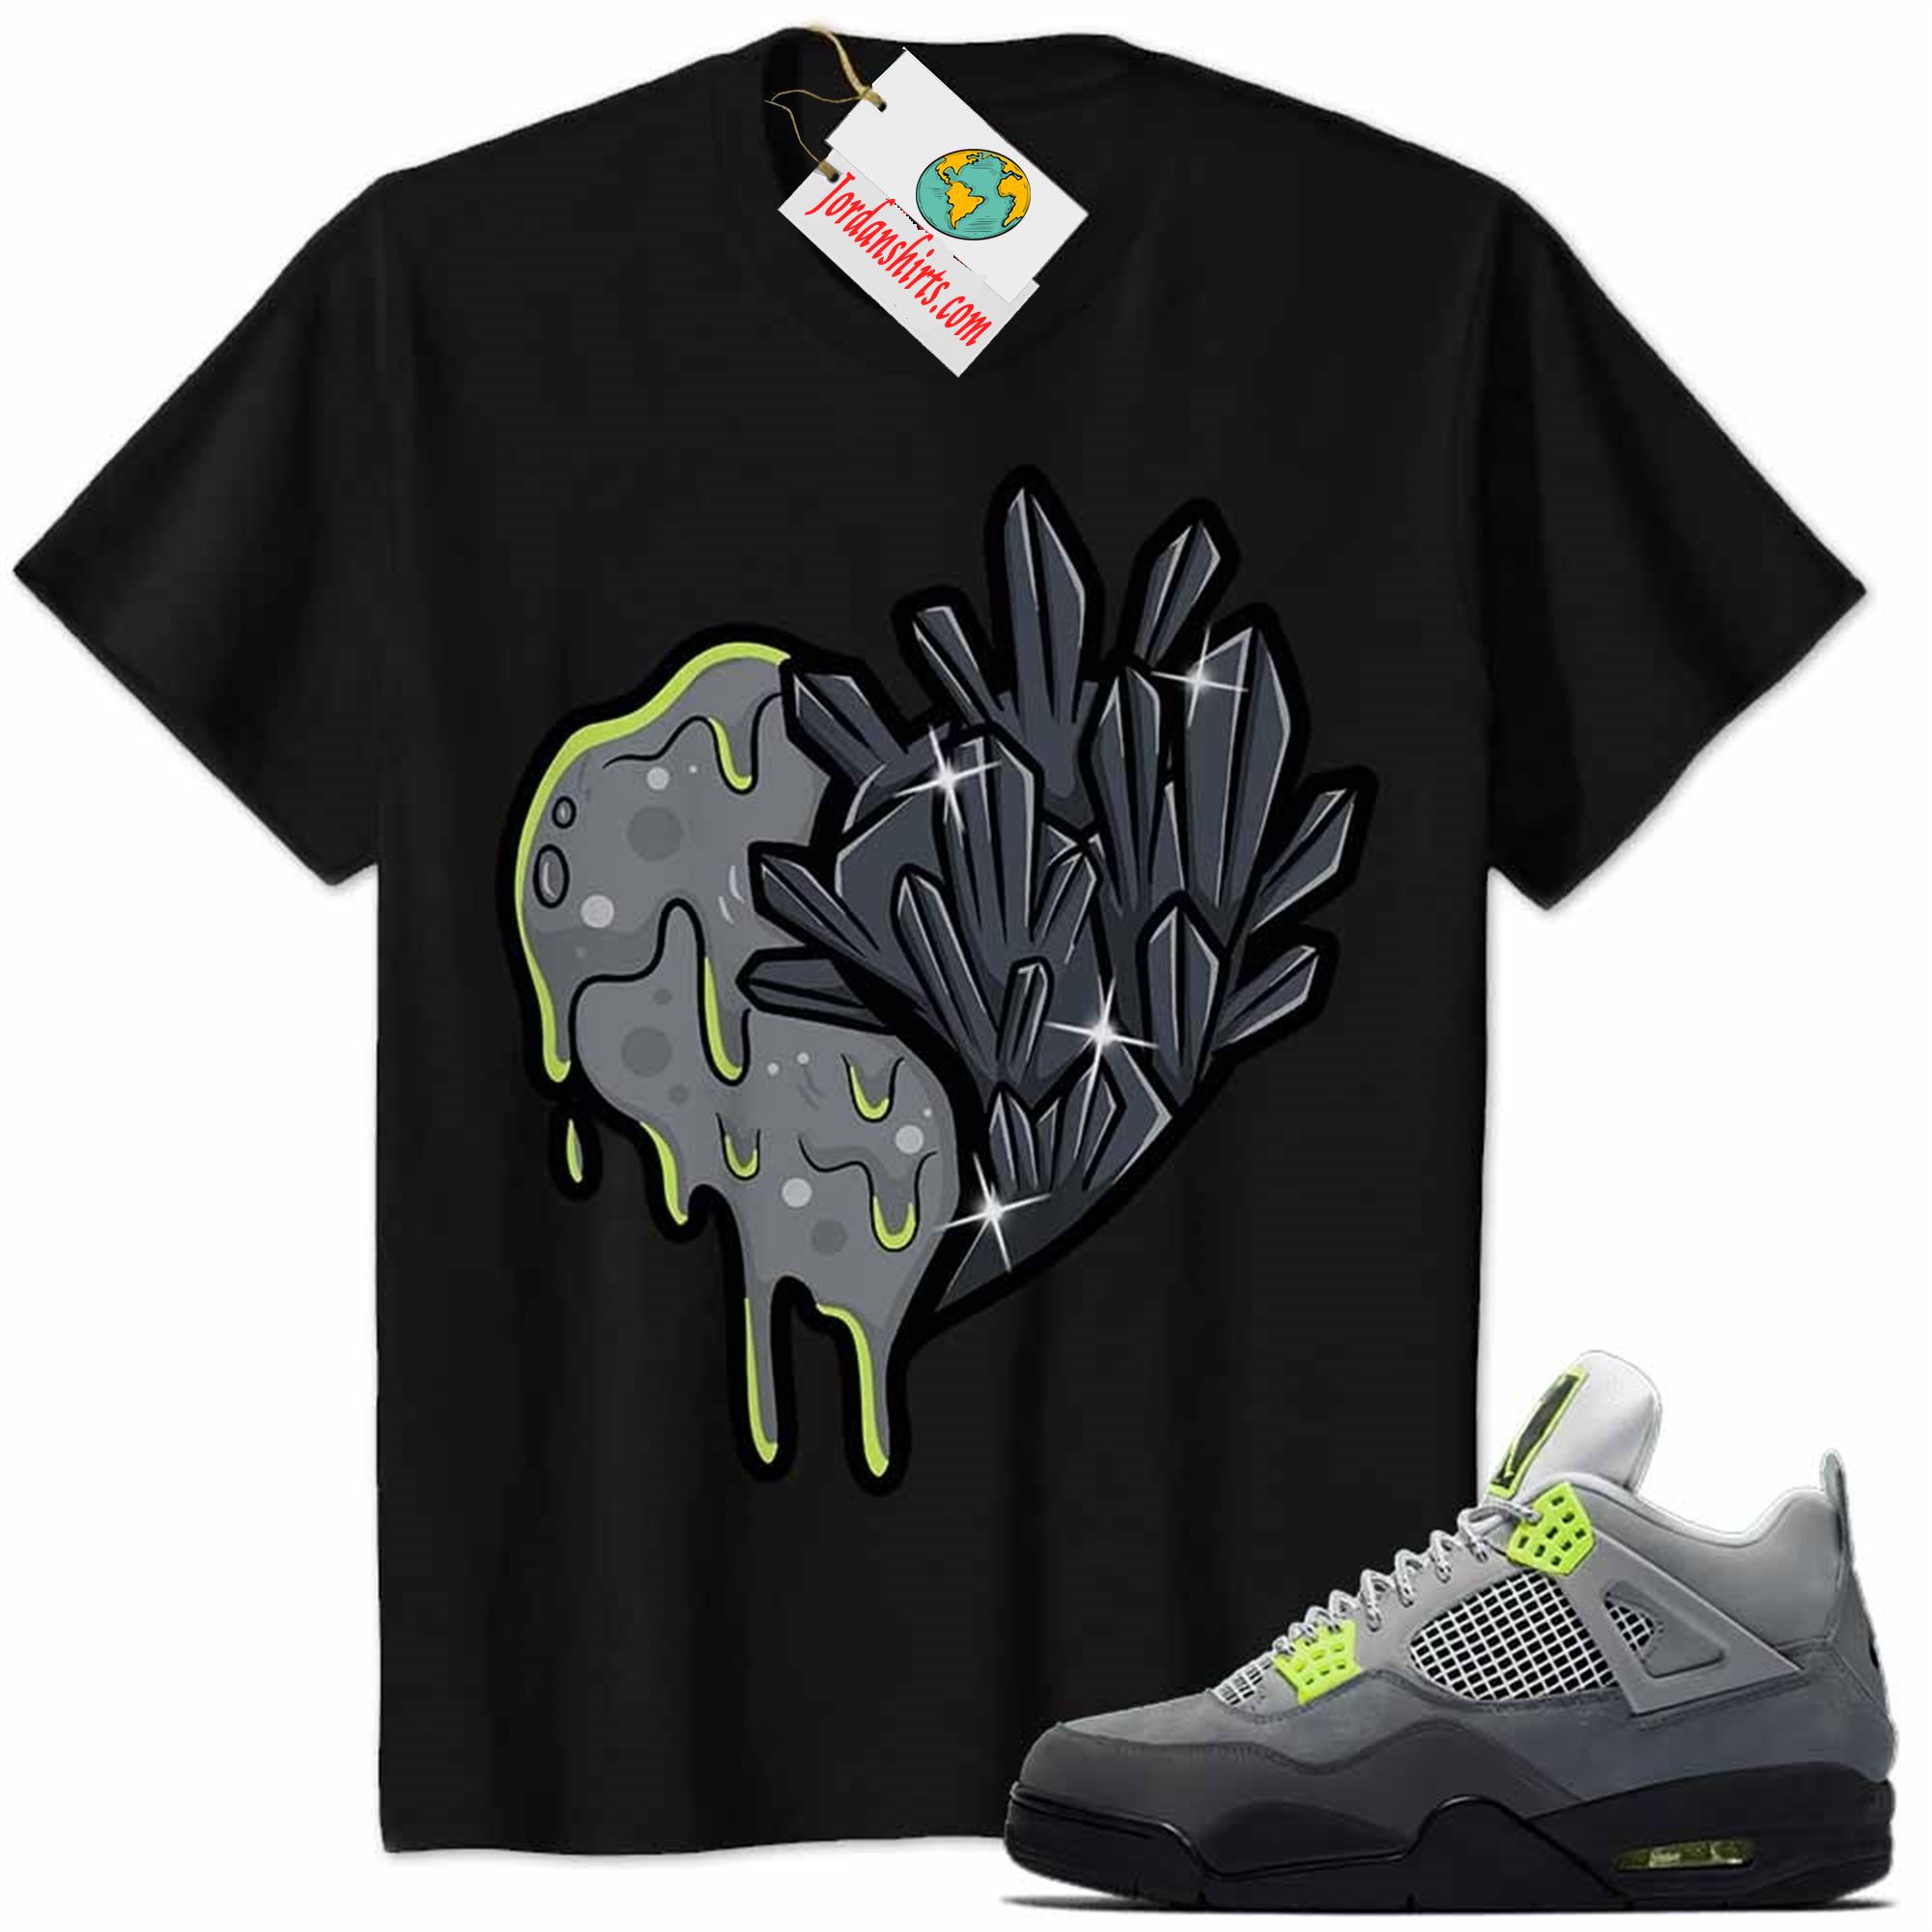 Jordan 4 Shirt, Crystal And Melt Heart Black Air Jordan 4 Neon 95 4s Plus Size Up To 5xl